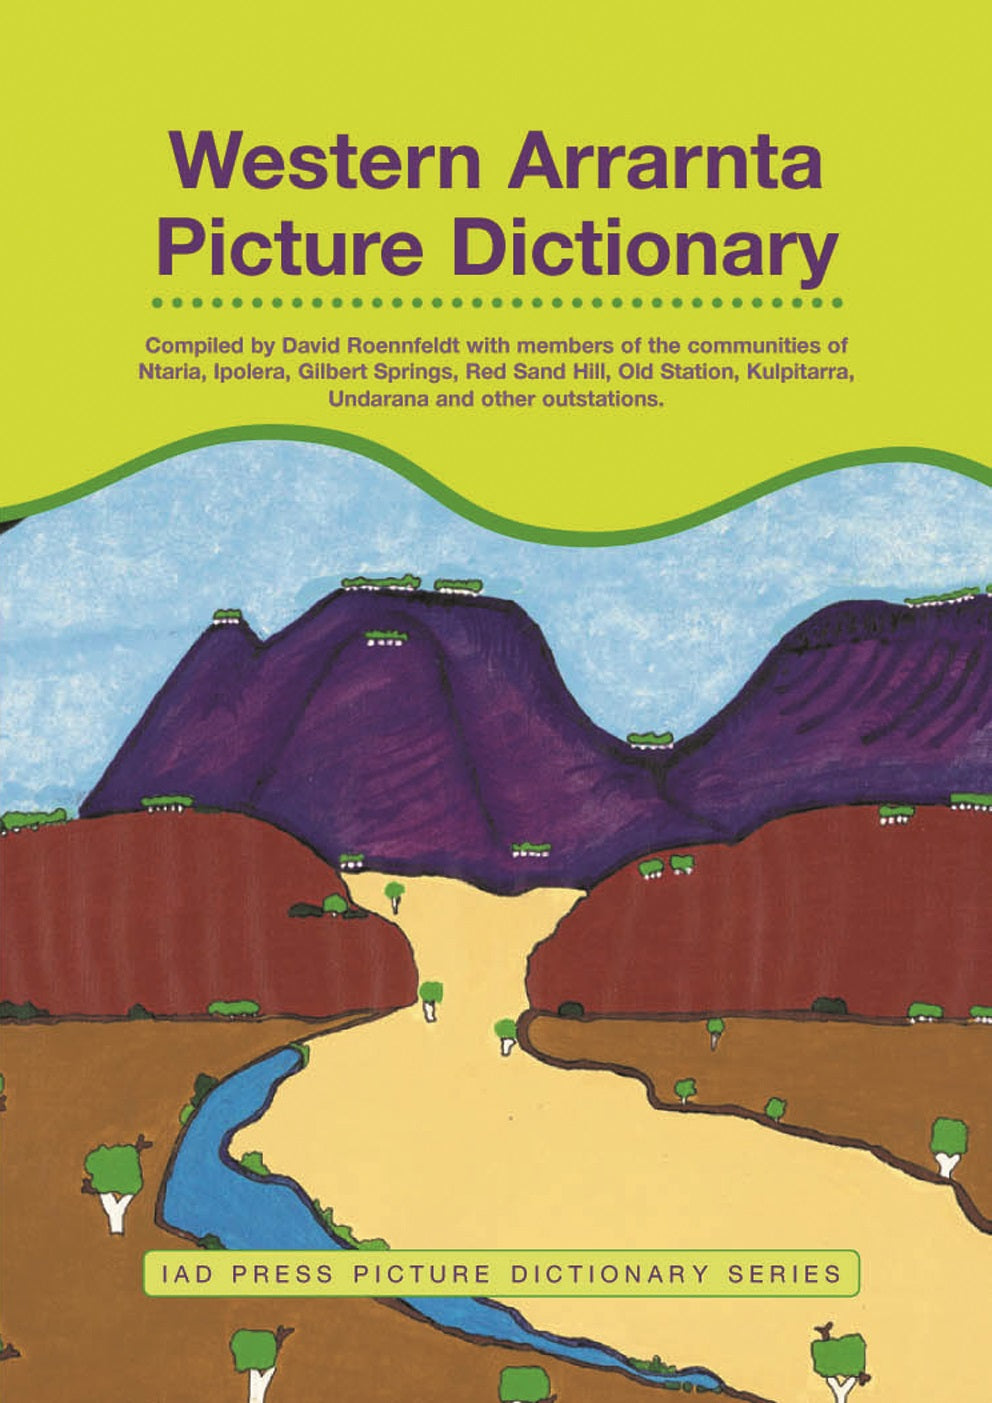 Western Arrarnta Picture Dictionary | IAD Press | Australian Aboriginal Publisher & Book Shop